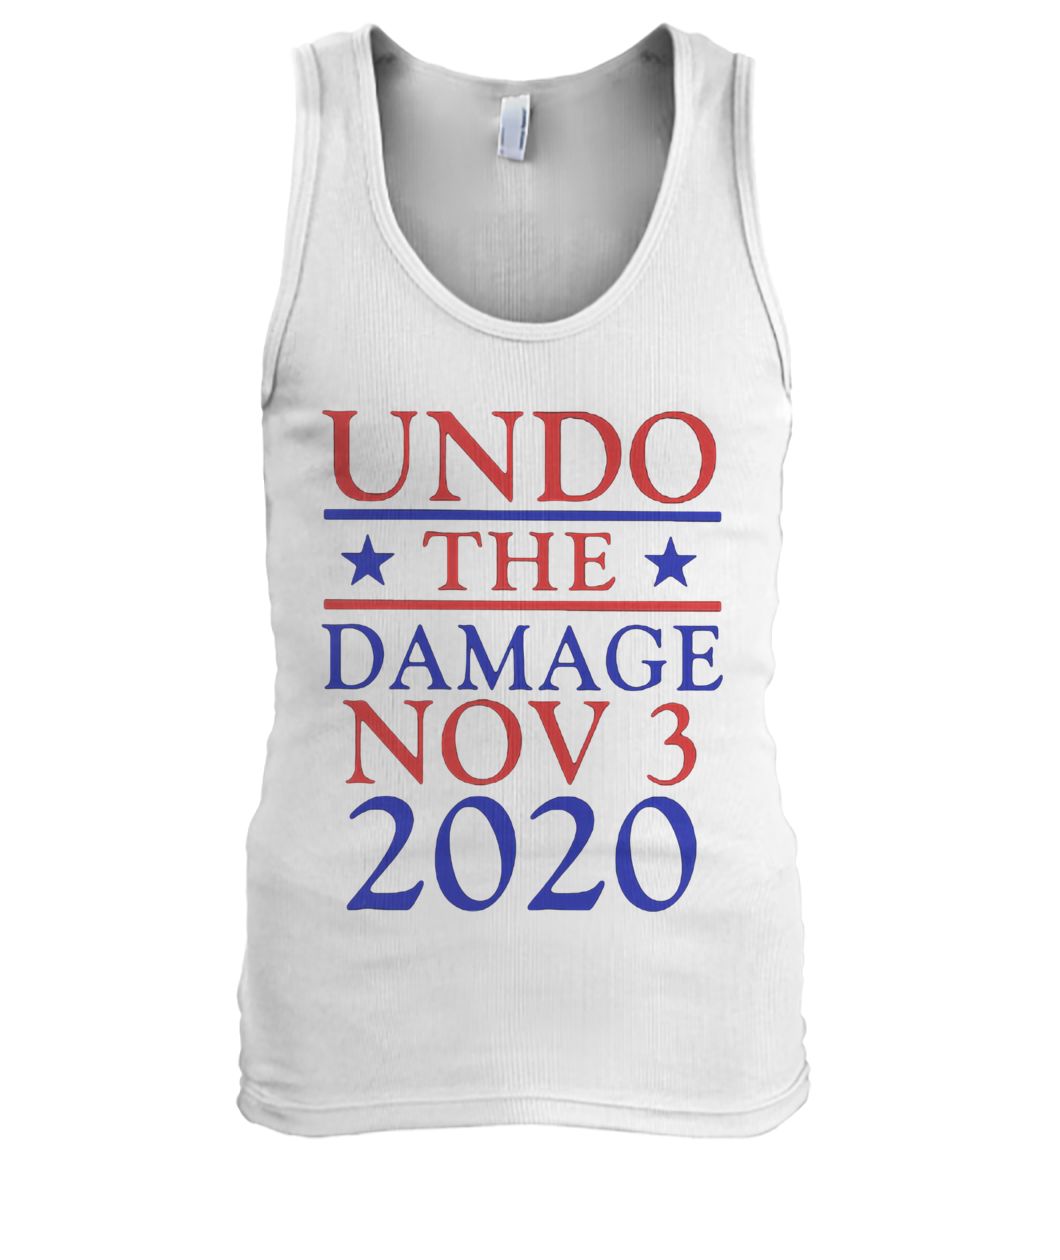 Undo the damage nov 3 2020 independent voters men's tank top